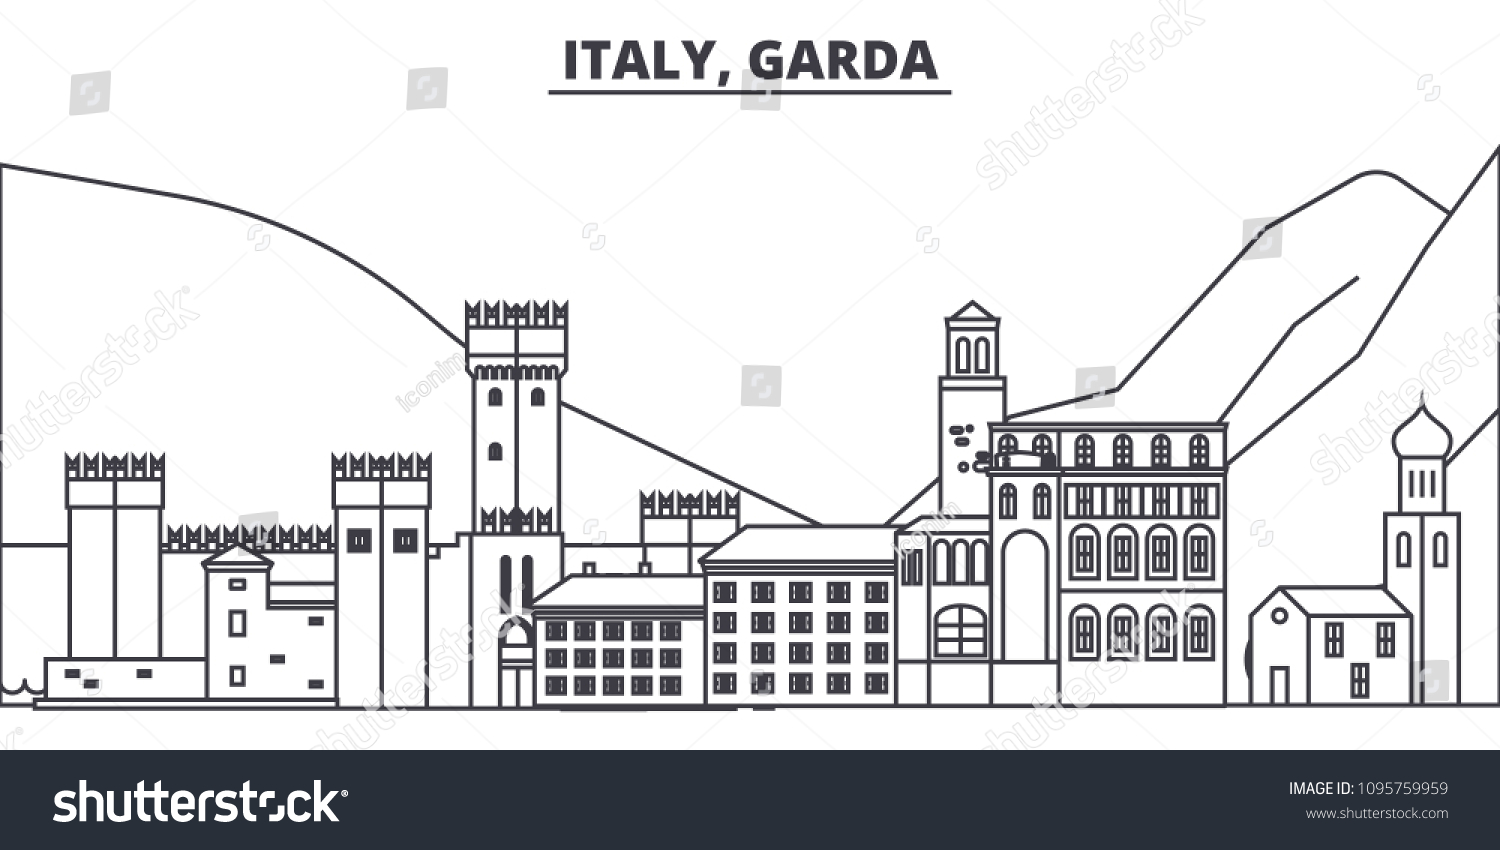 SVG of Italy, Garda line skyline vector illustration. Italy, Garda linear cityscape with famous landmarks, city sights, vector landscape.  svg